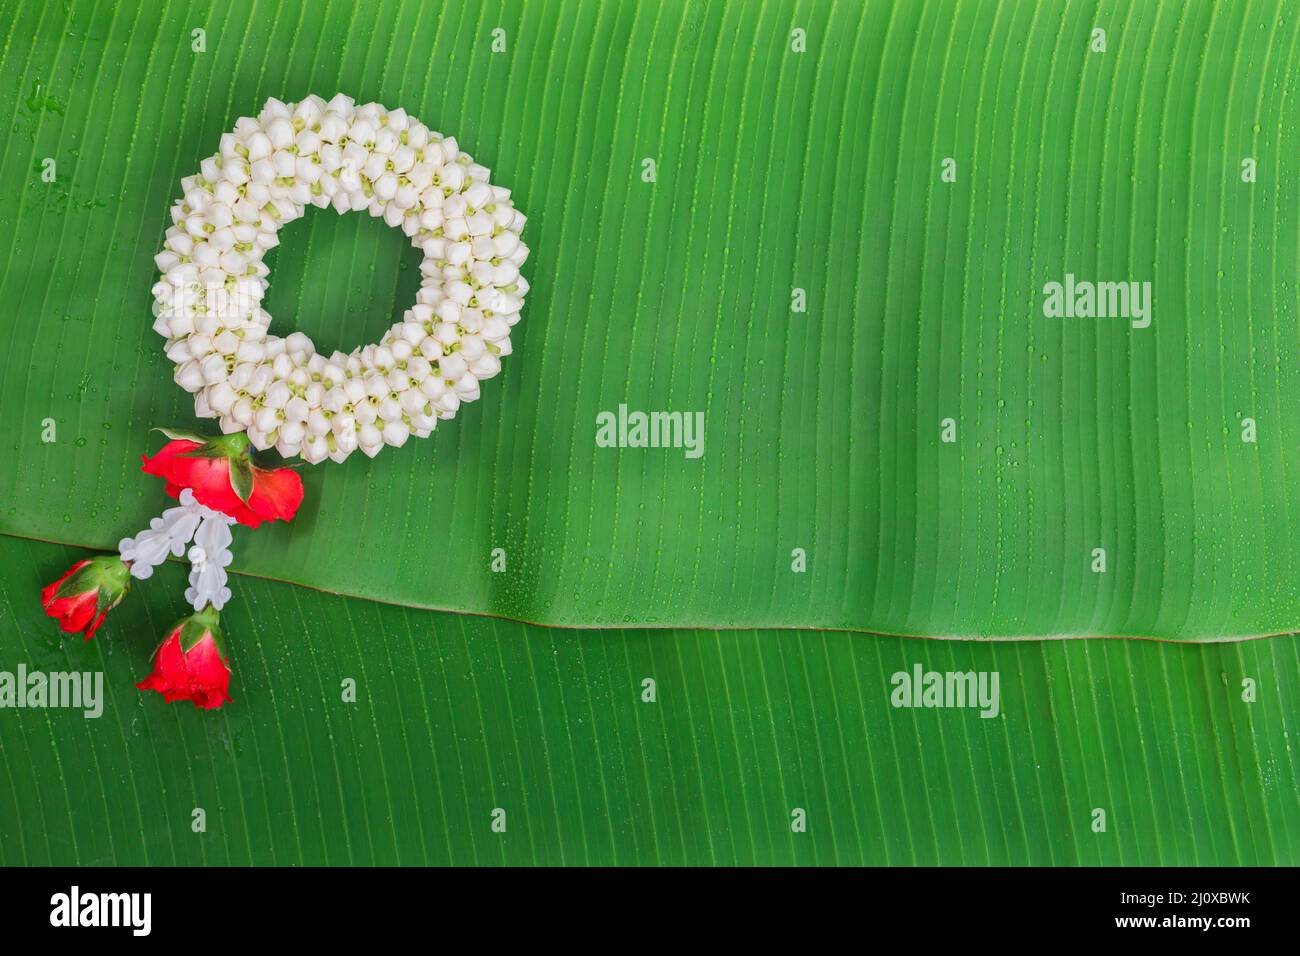 Songkran Festival background with jasmine garland on green banana leaf background Stock Photo